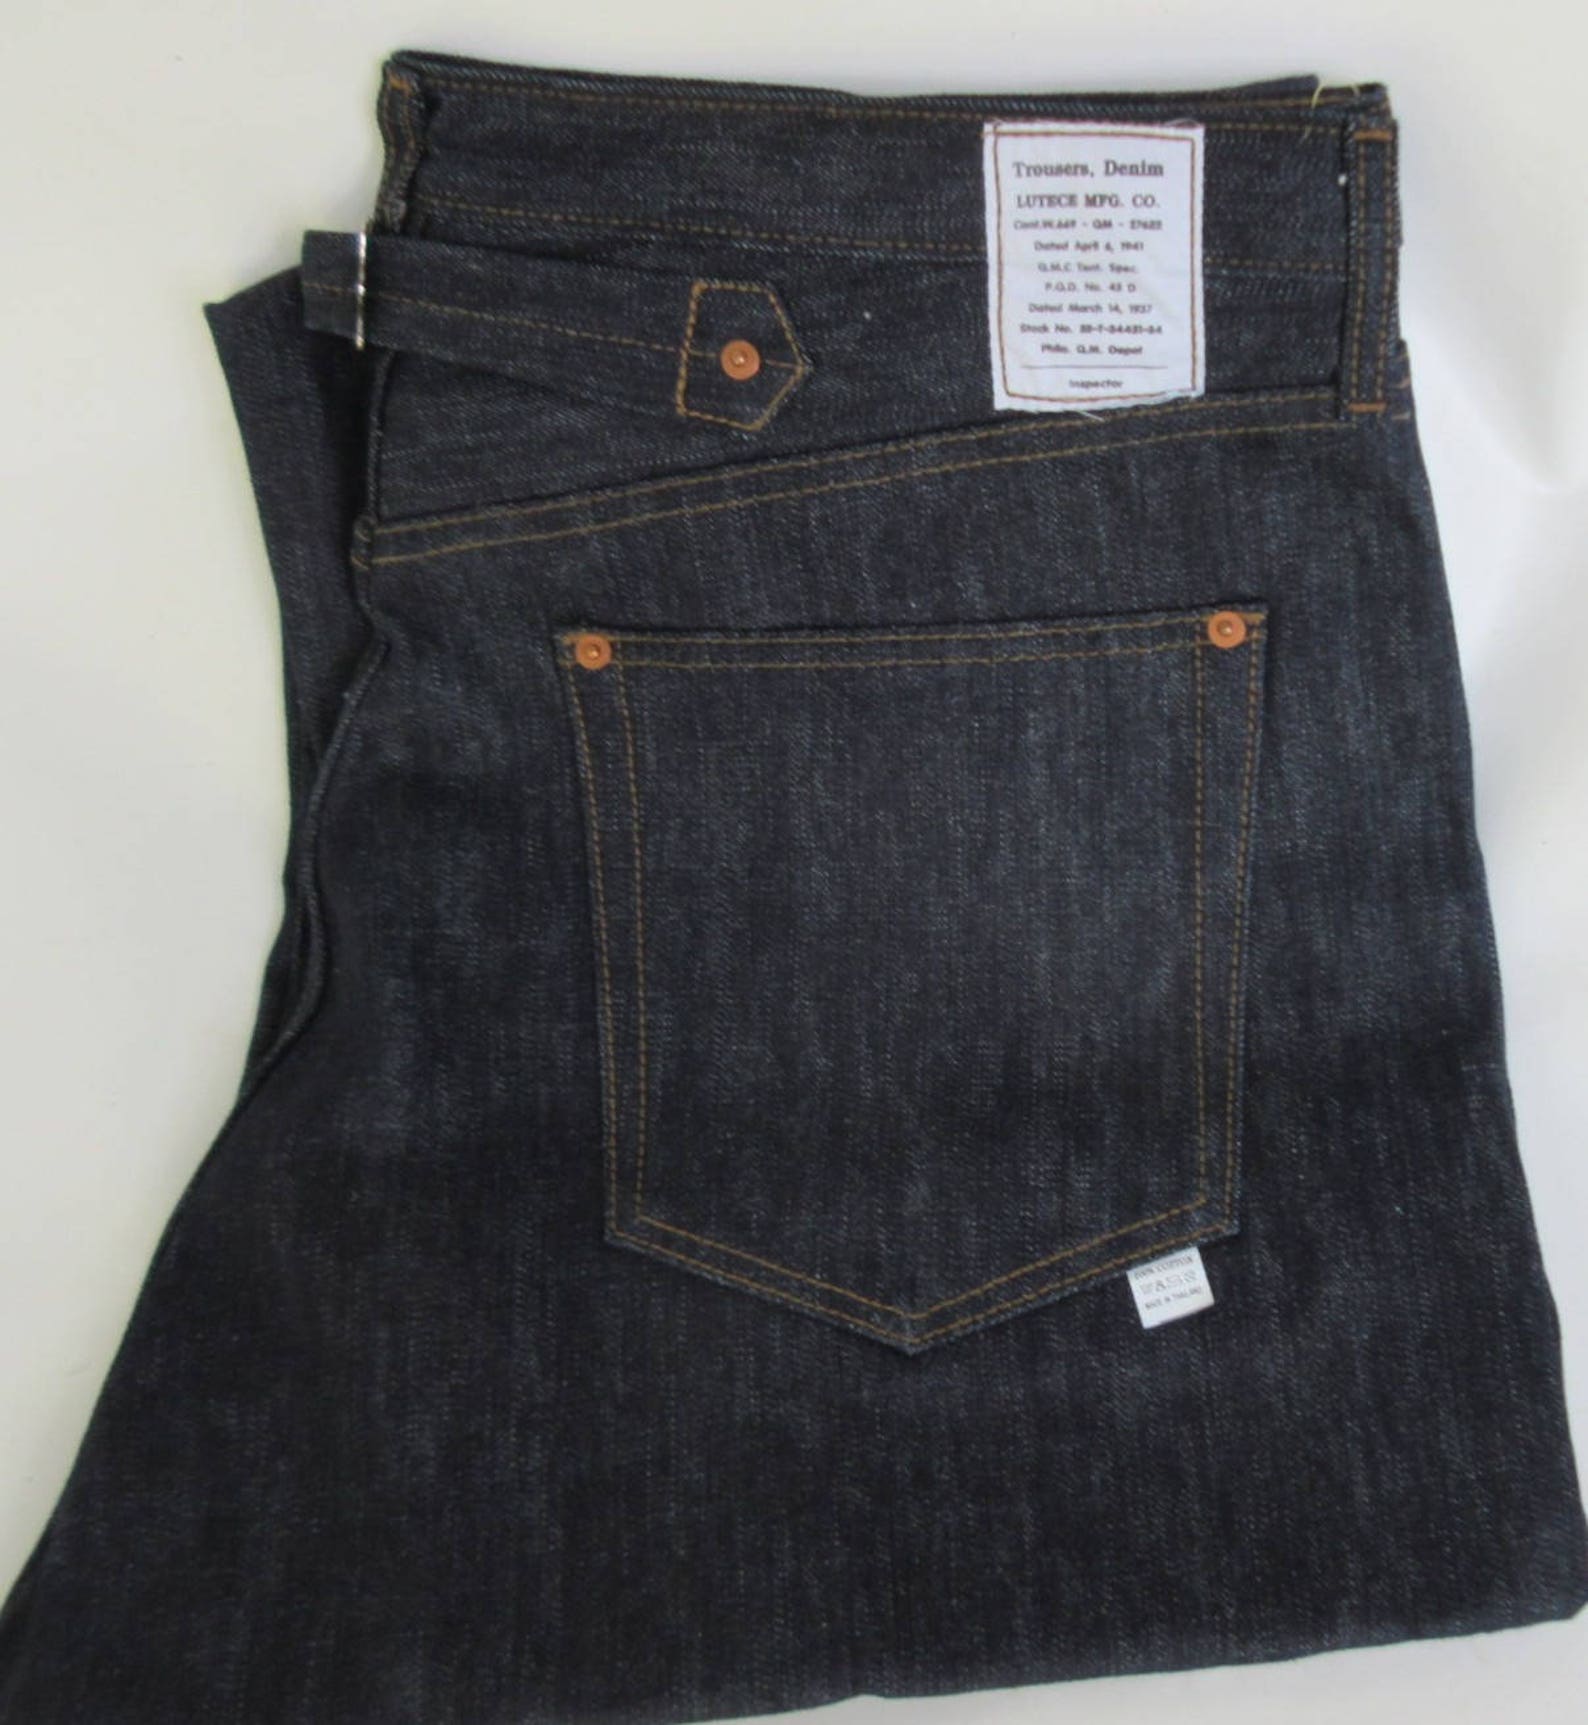 Lutece Mfg Co Quartermaster Denim Jeans 30-40s Style - Etsy